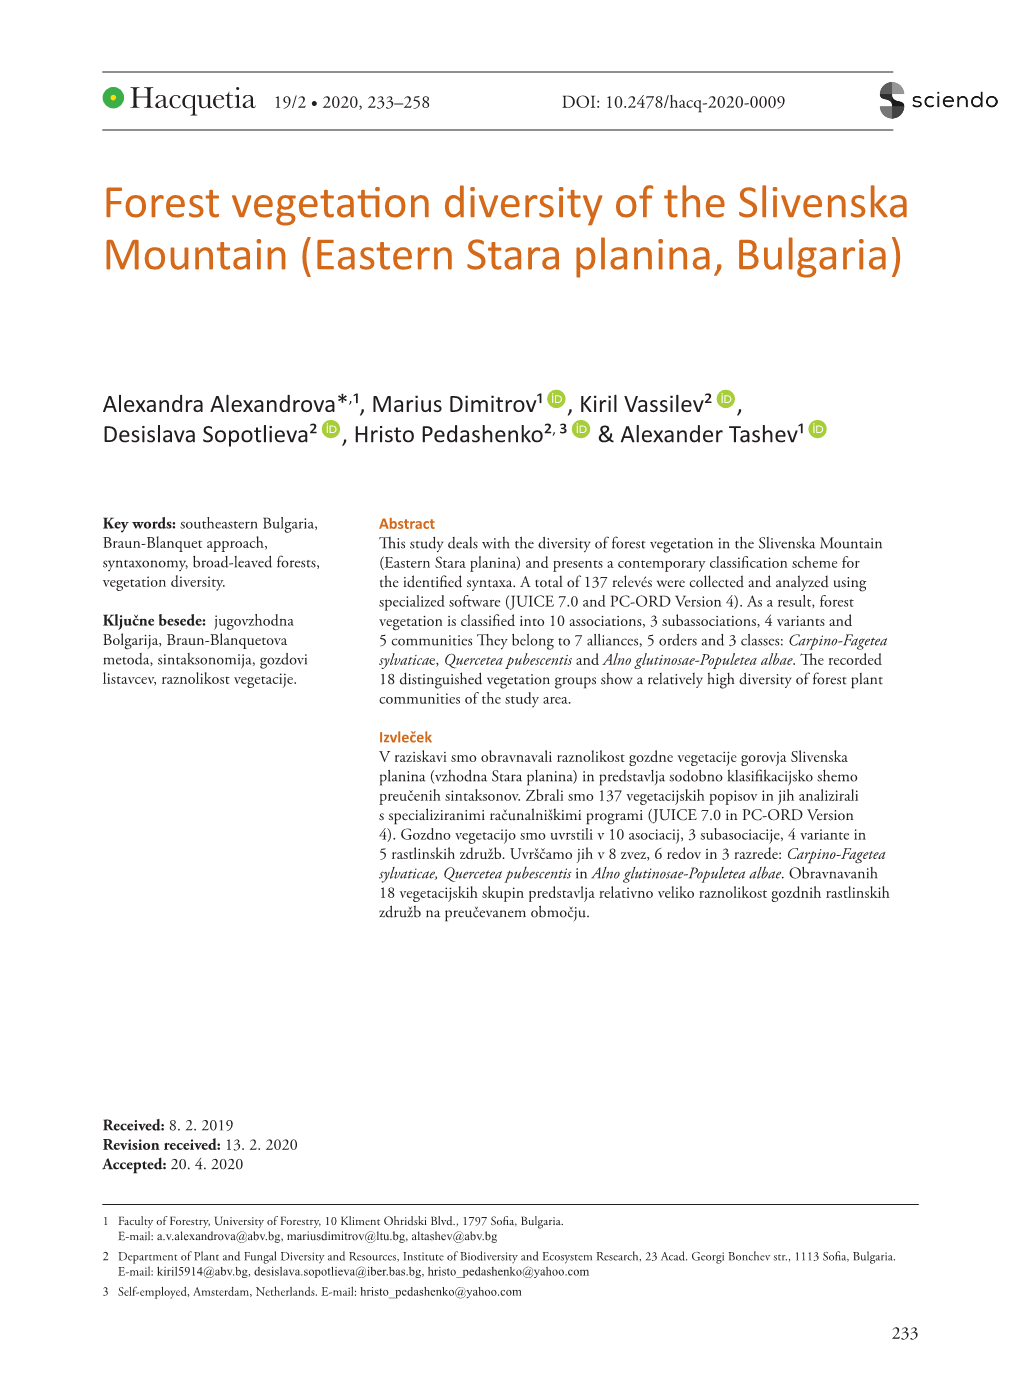 Forest Vegetation Diversity of the Slivenska Mountain (Eastern Stara Planina, Bulgaria)